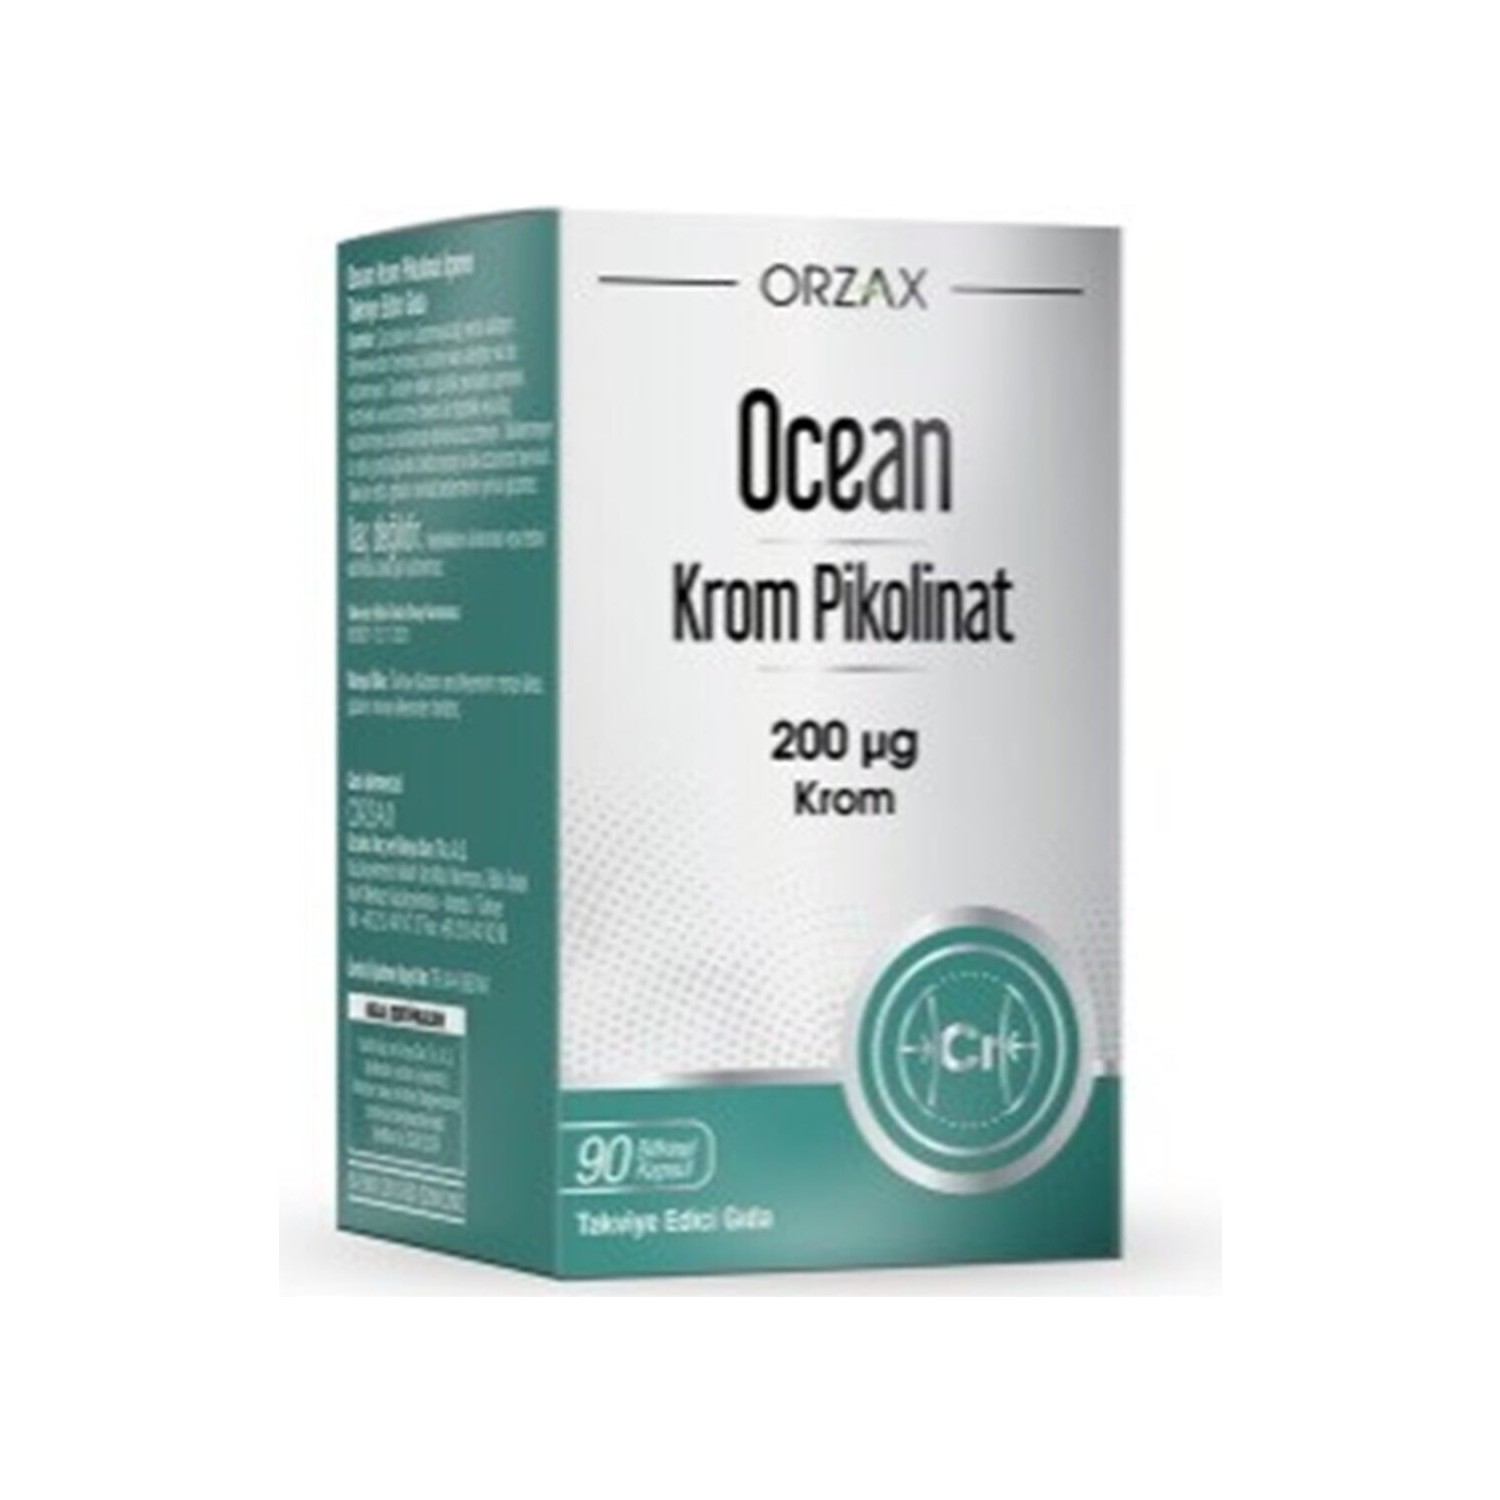 Пиколинат хрома Ocean, 90 капсул пиколинат хрома ocean orzax 20 мкг 90 капсул